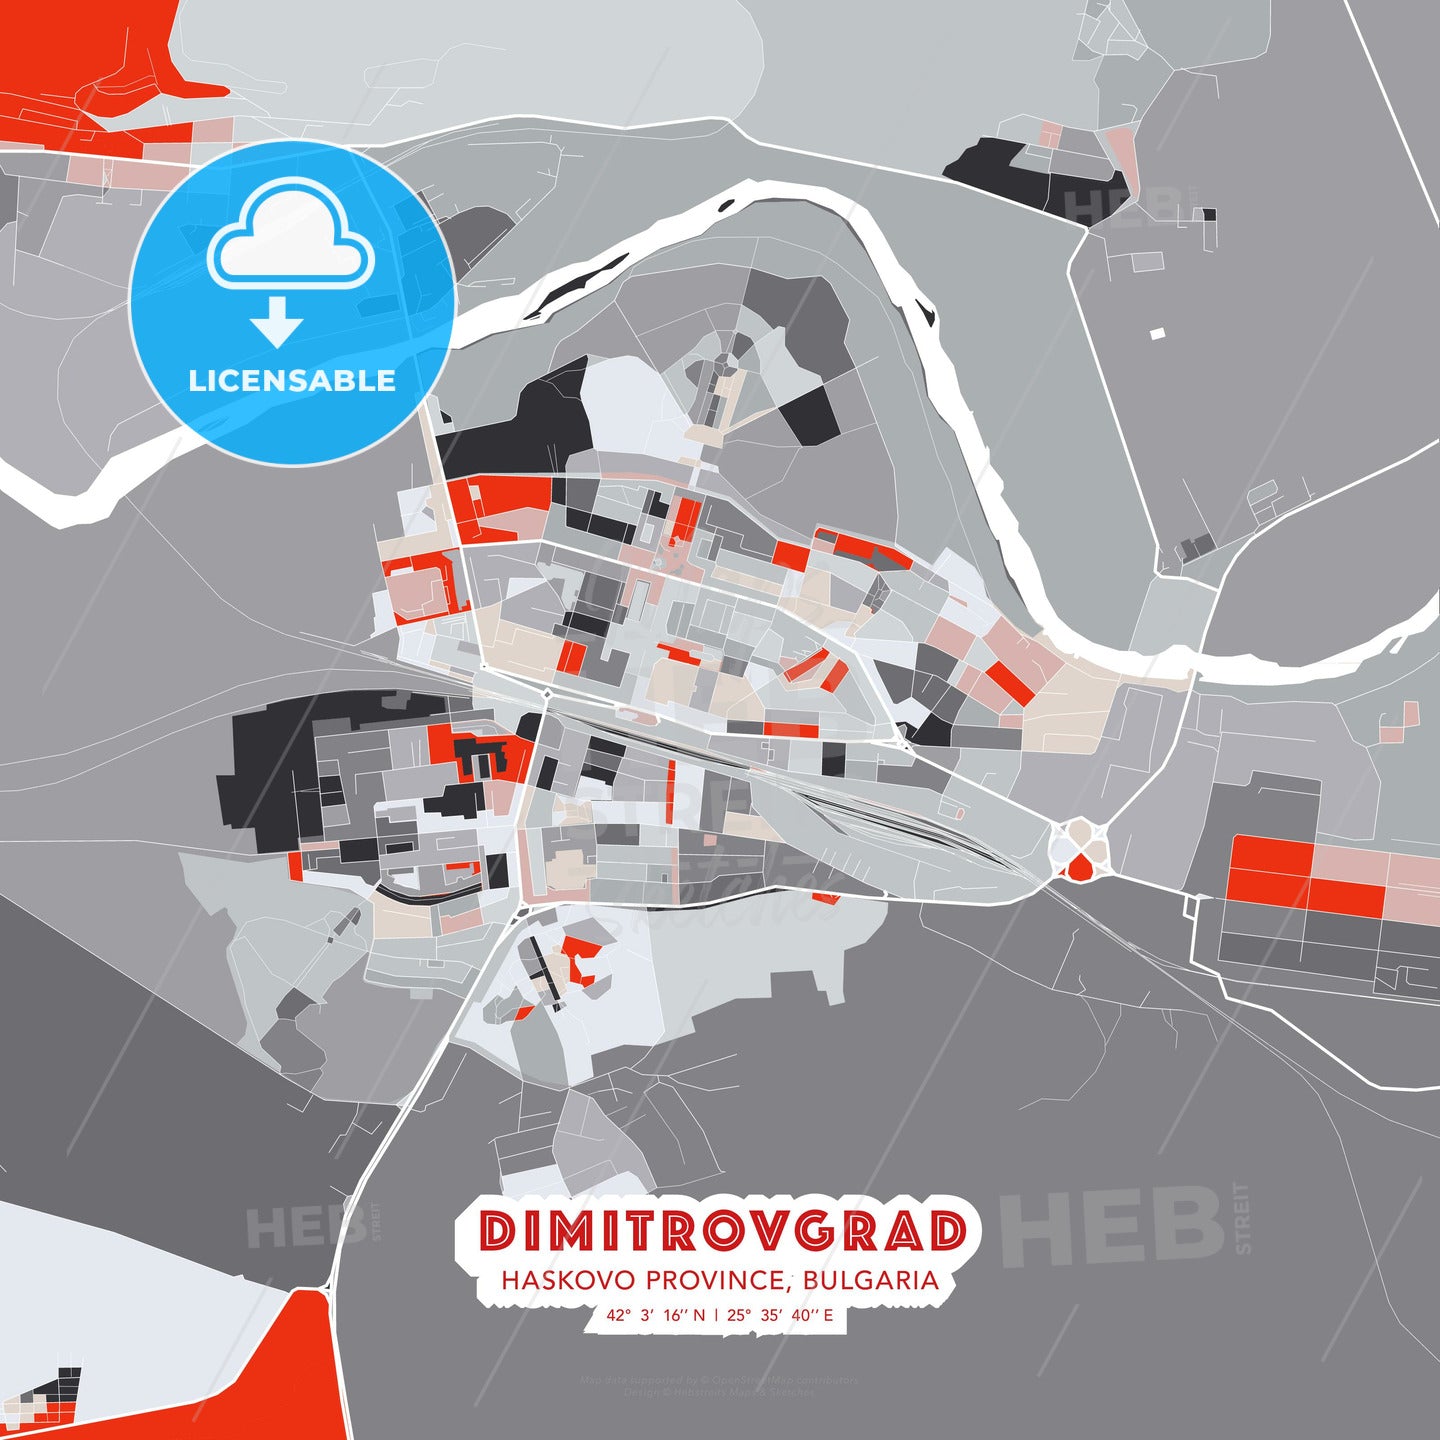 Dimitrovgrad, Haskovo Province, Bulgaria, modern map - HEBSTREITS Sketches